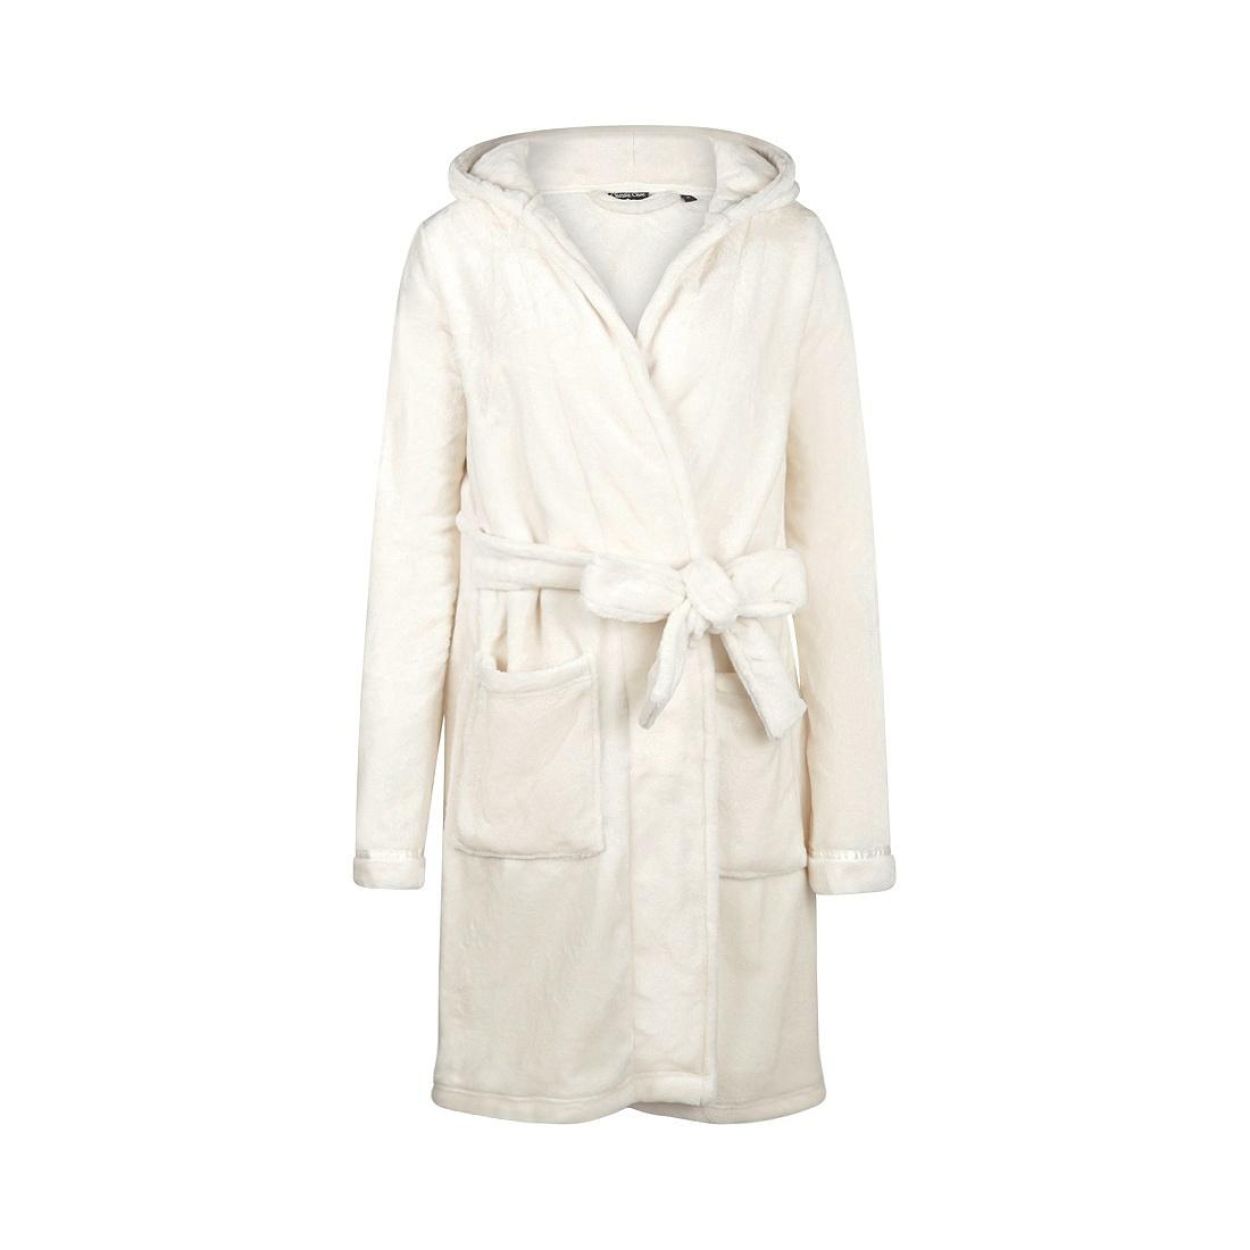 Charlie Choe Women short bathrobe (S49136-38/Off white) - WeekendMode